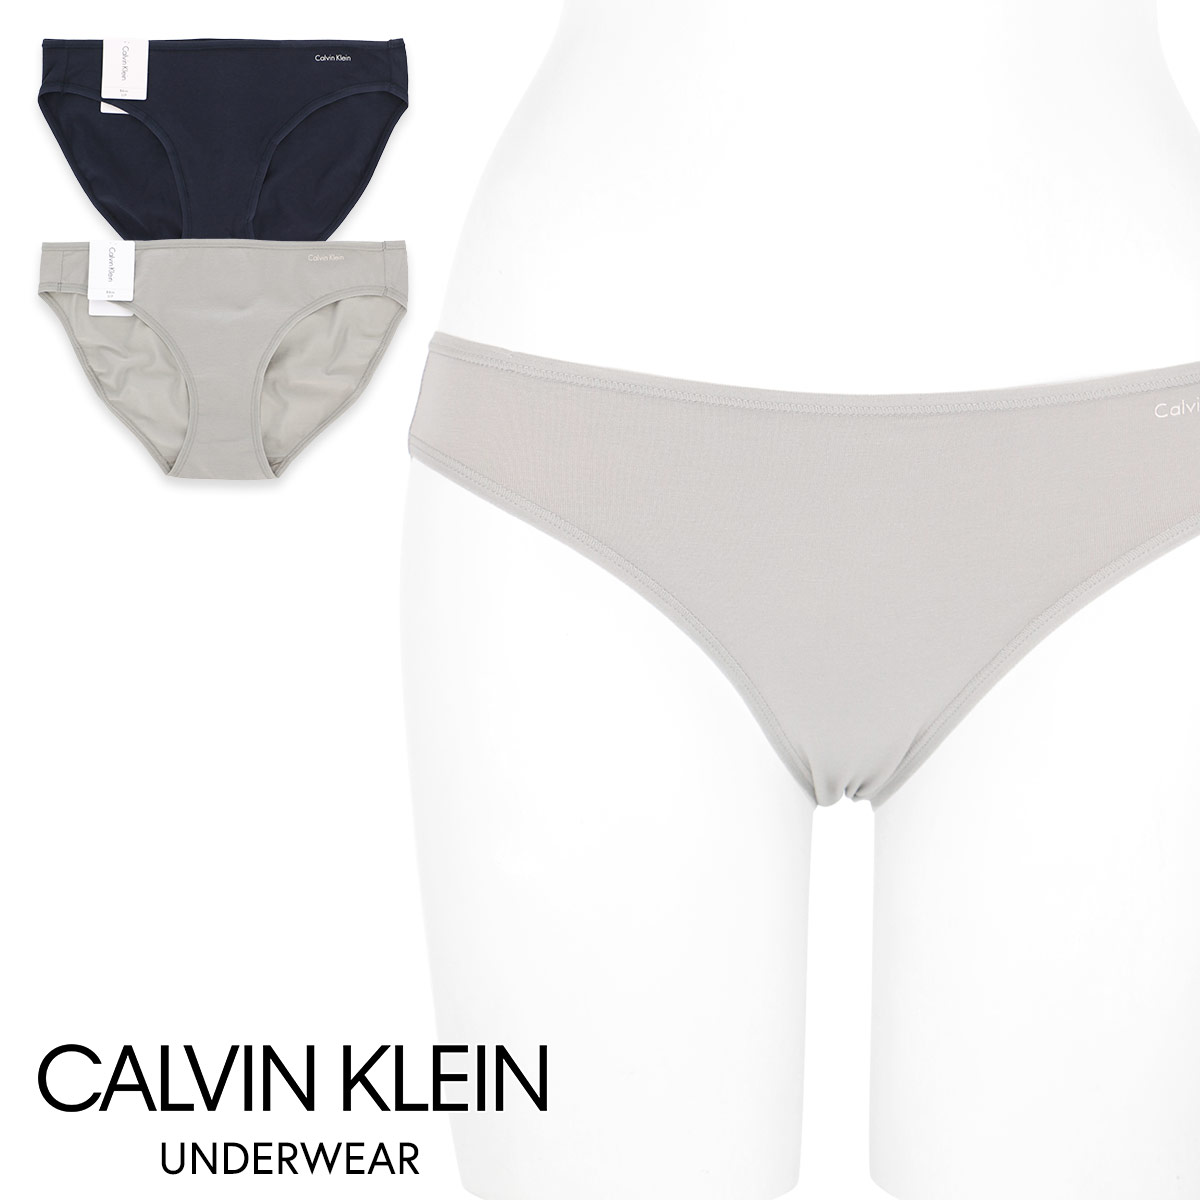 women's underwear like calvin klein